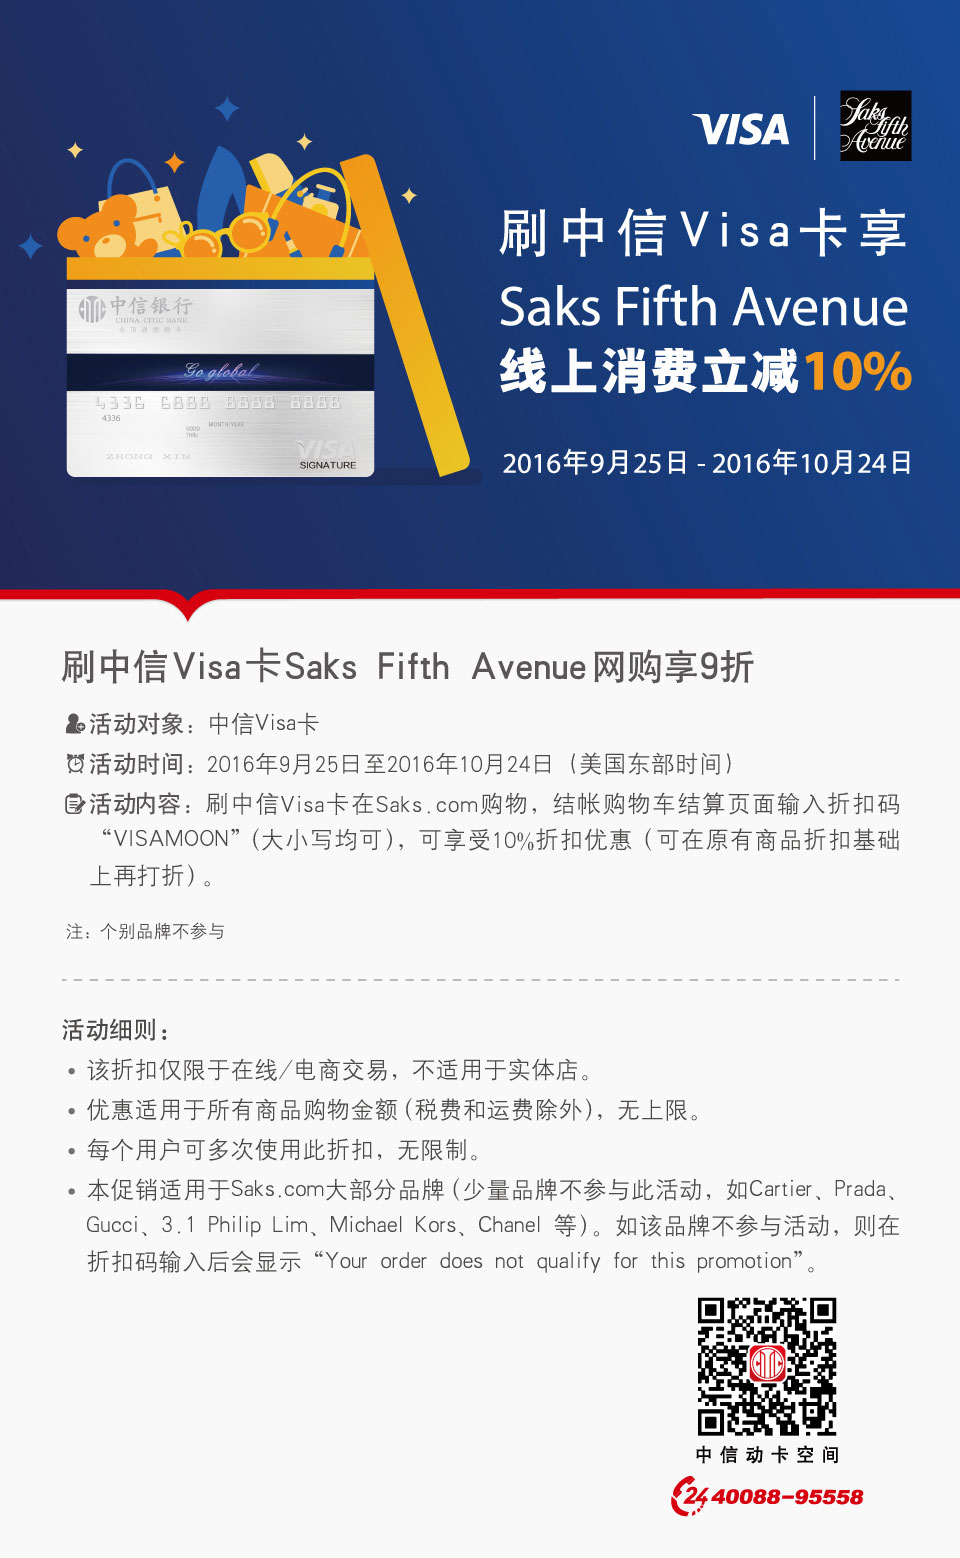 刷中信Visa卡Saks Fifth Avenue立减10% 